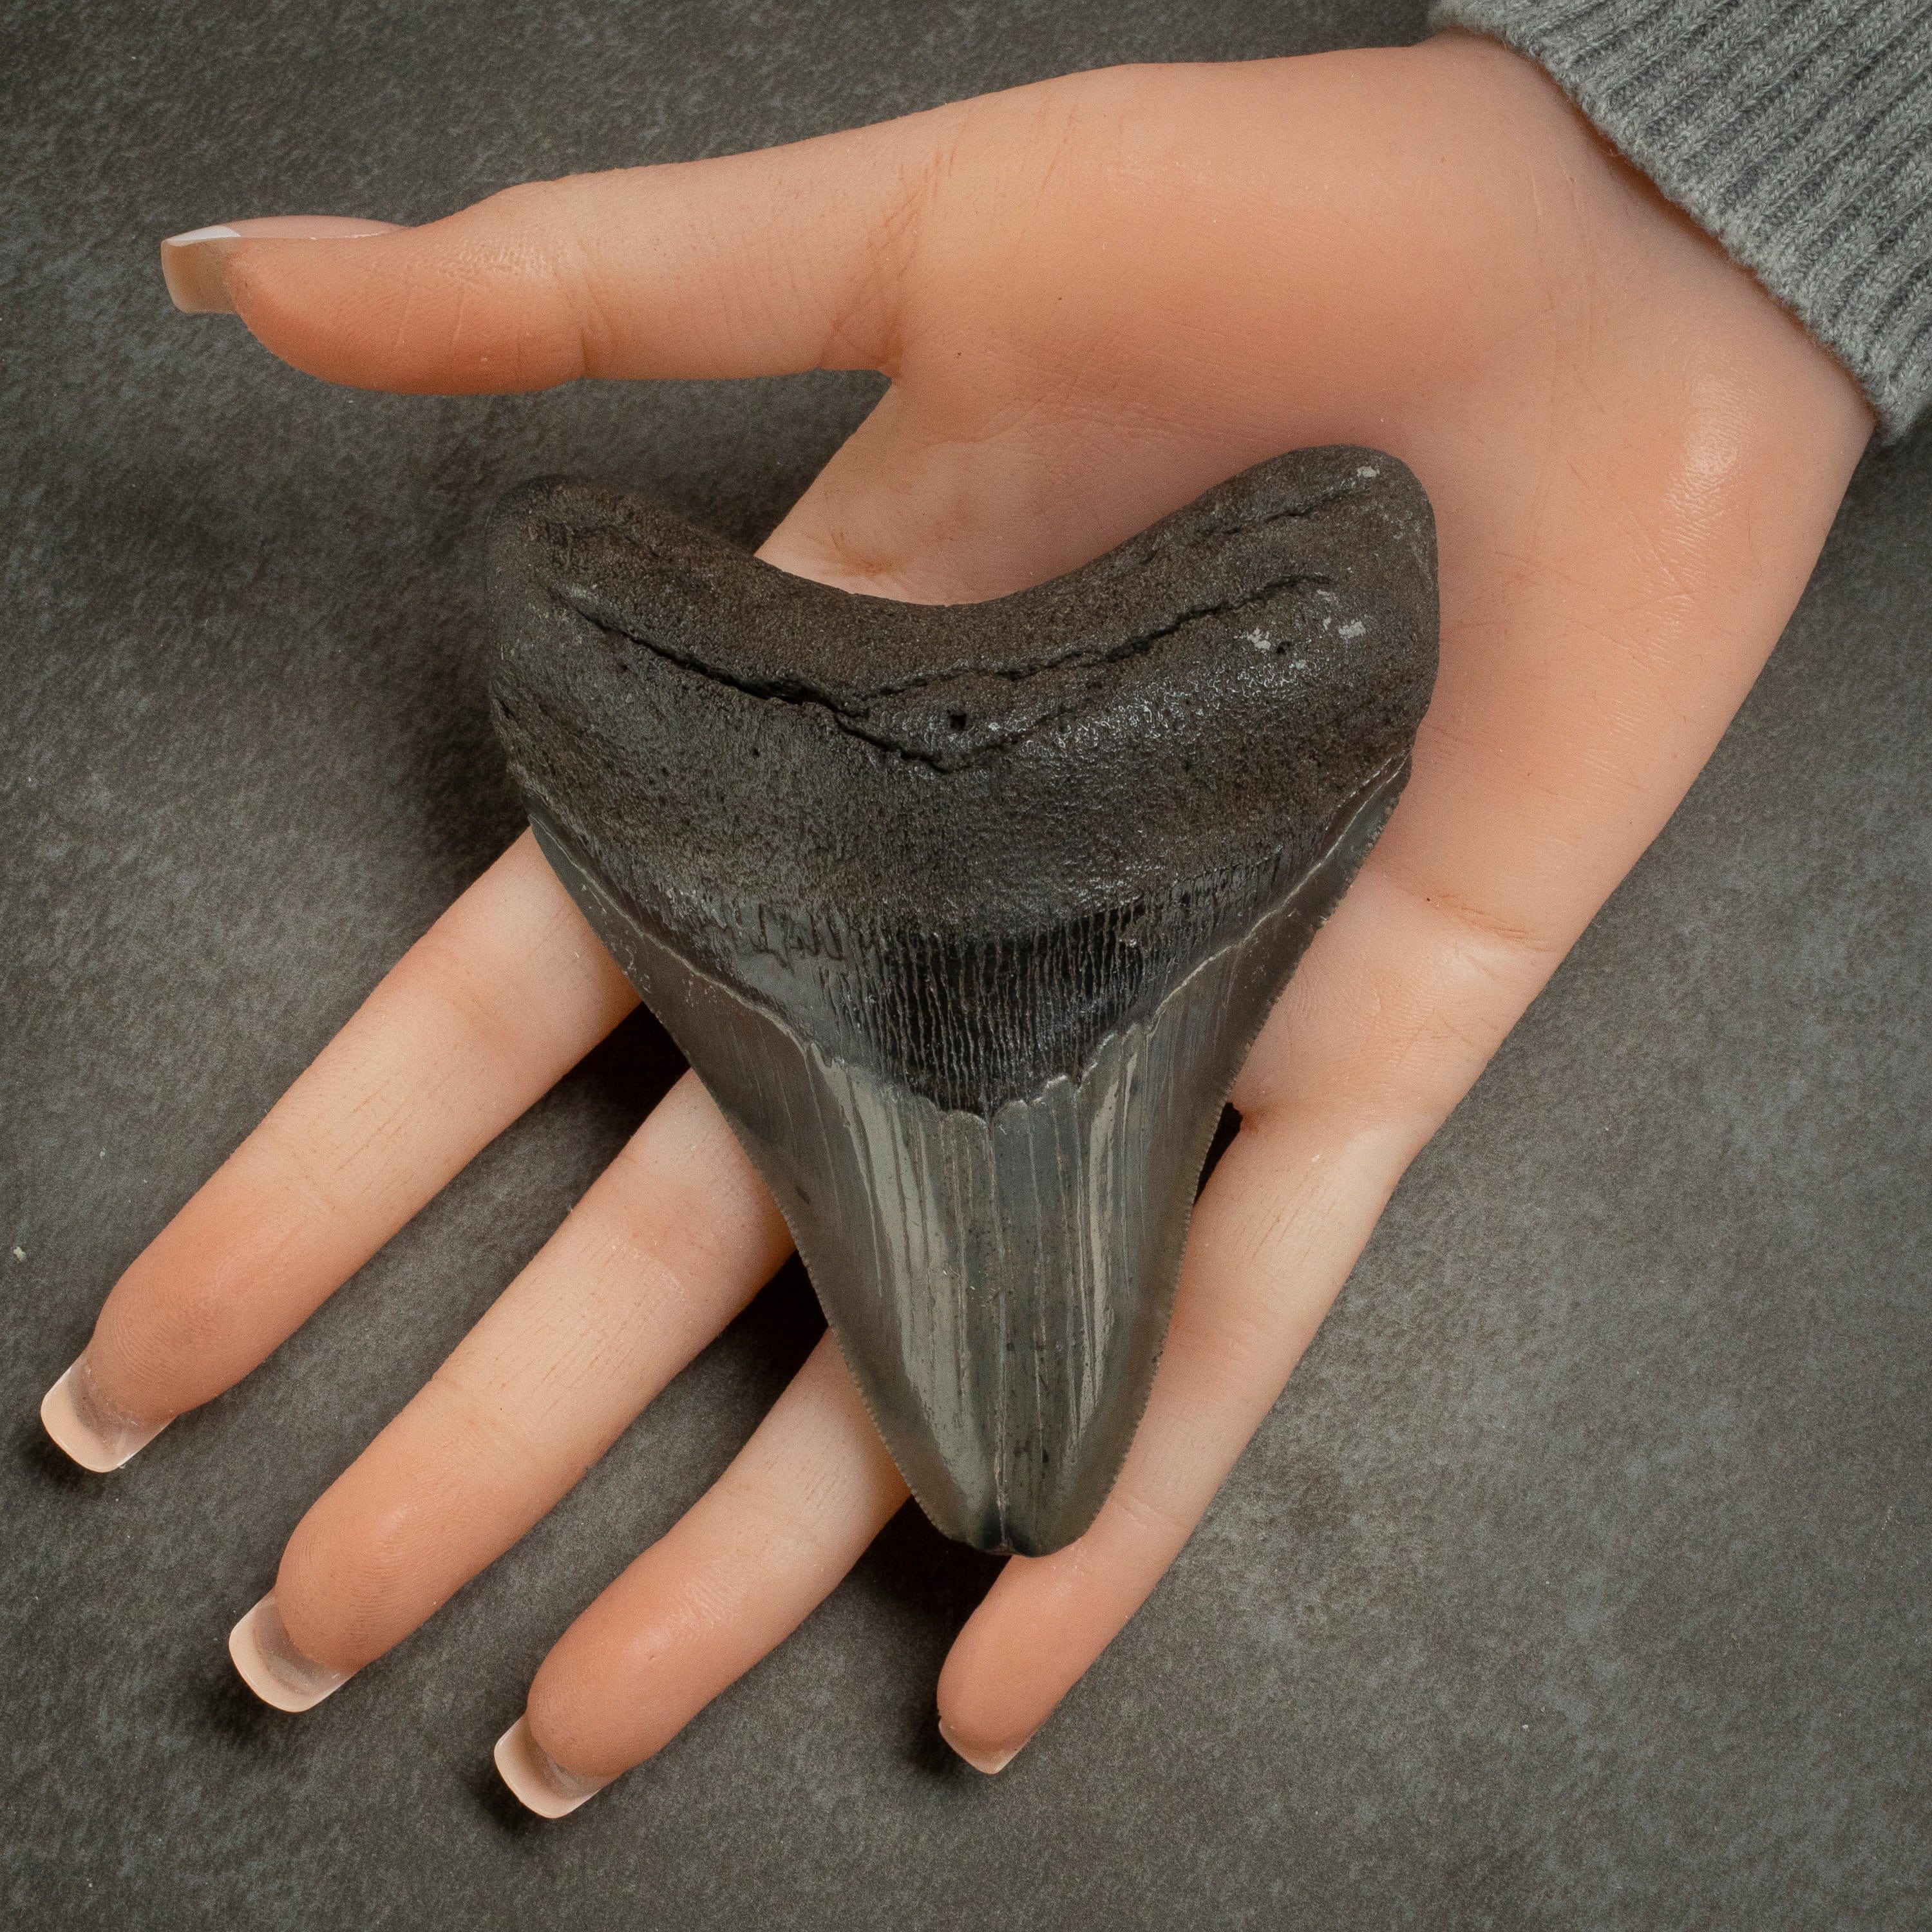 Kalifano Megalodon Teeth Megalodon Tooth from South Carolina - 3.8" ST1600.027